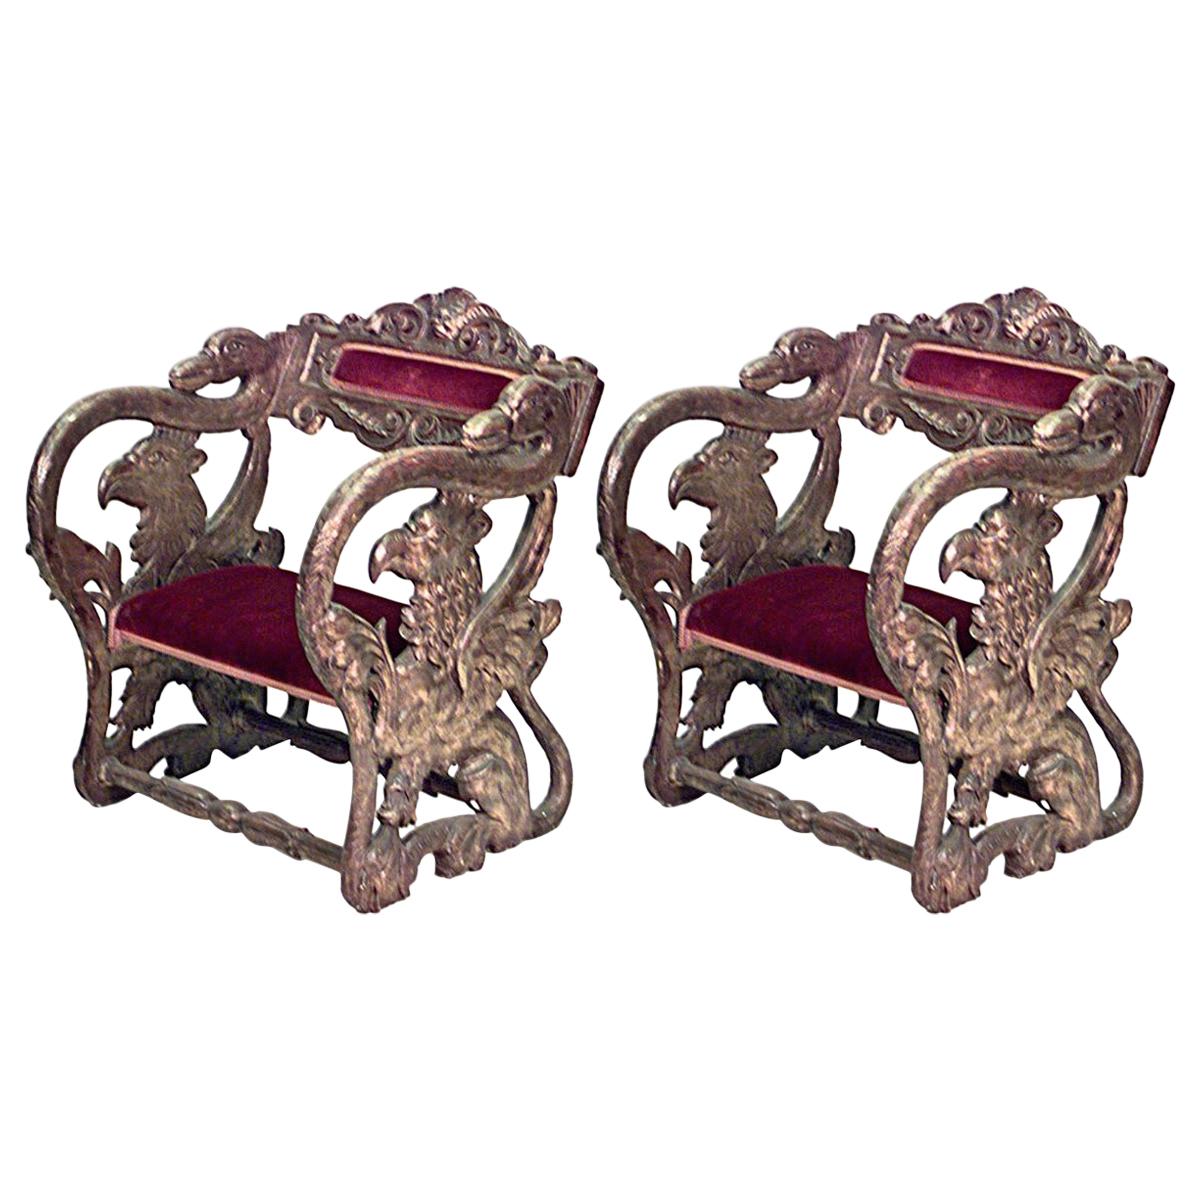 Pairs of 19th Century Italian Renaissance Style Jester Chairs